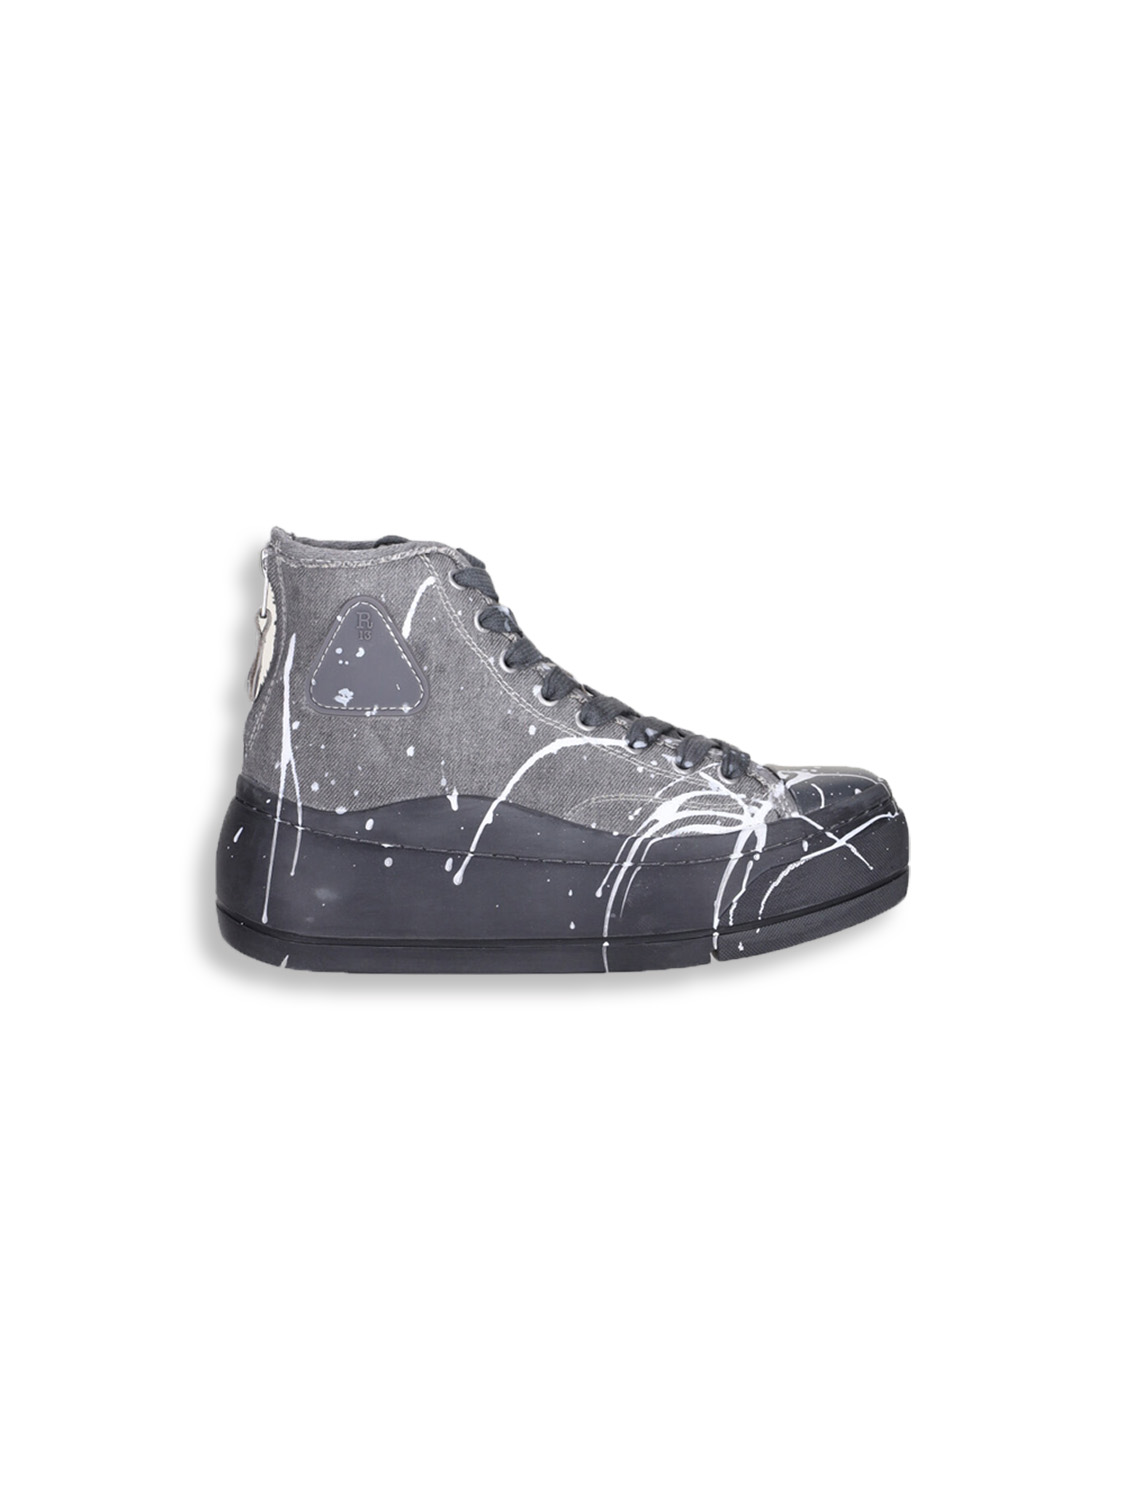 Kurt High Top Sneaker - Light gray jeans sneaker with paint splattering  